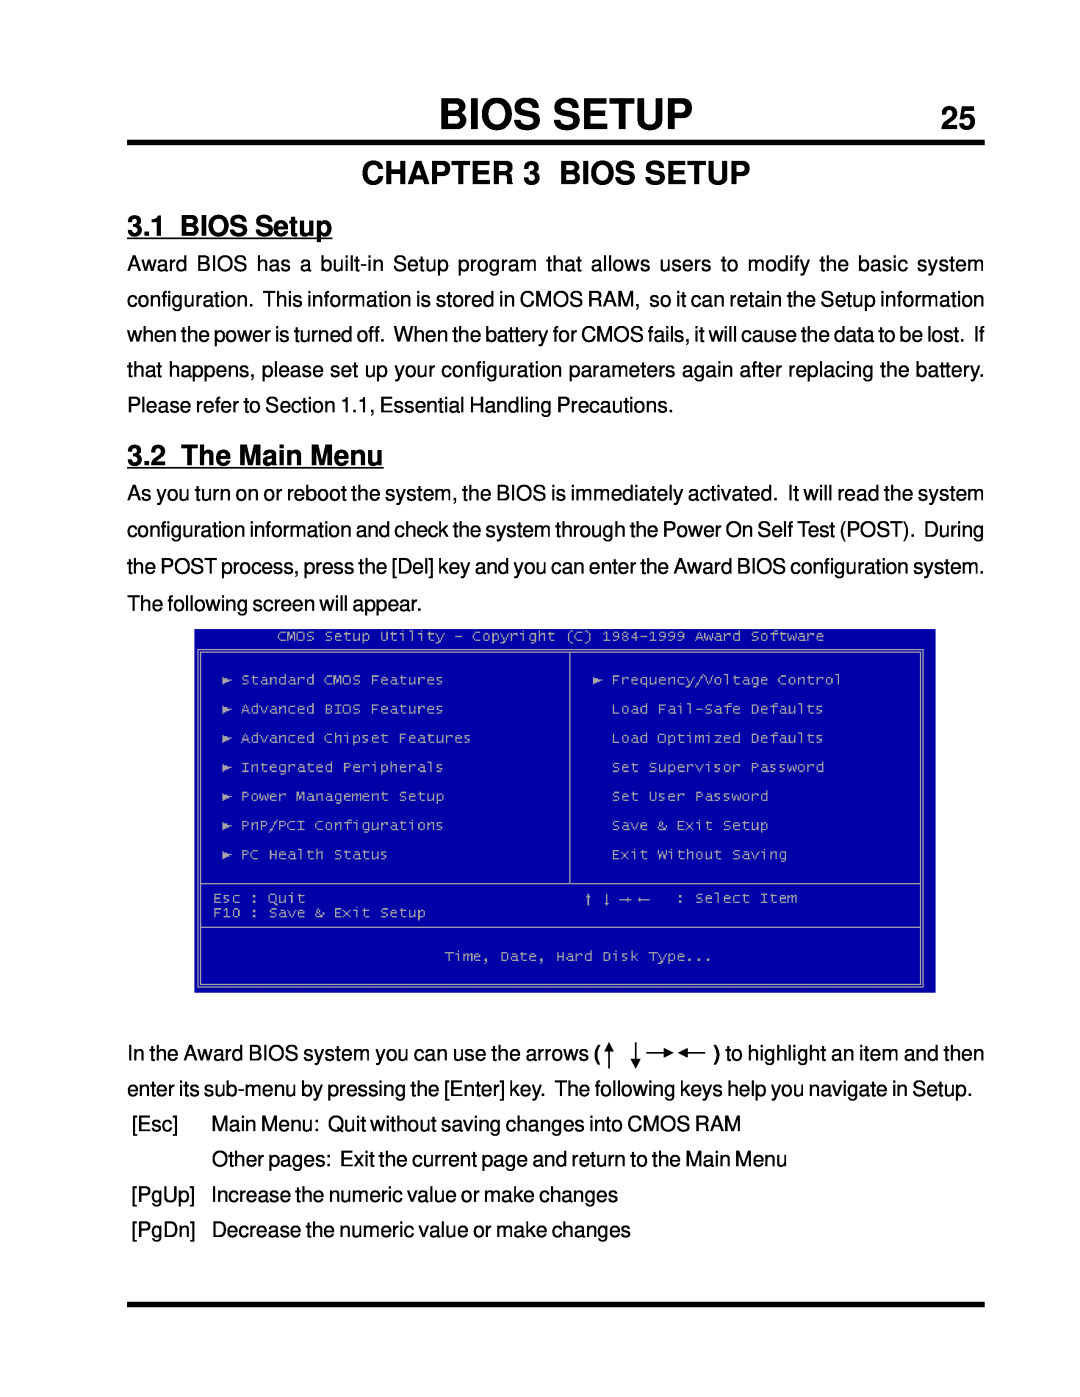 Intel TS-ASP3 user manual Bios Setup, BIOS Setup, The Main Menu 